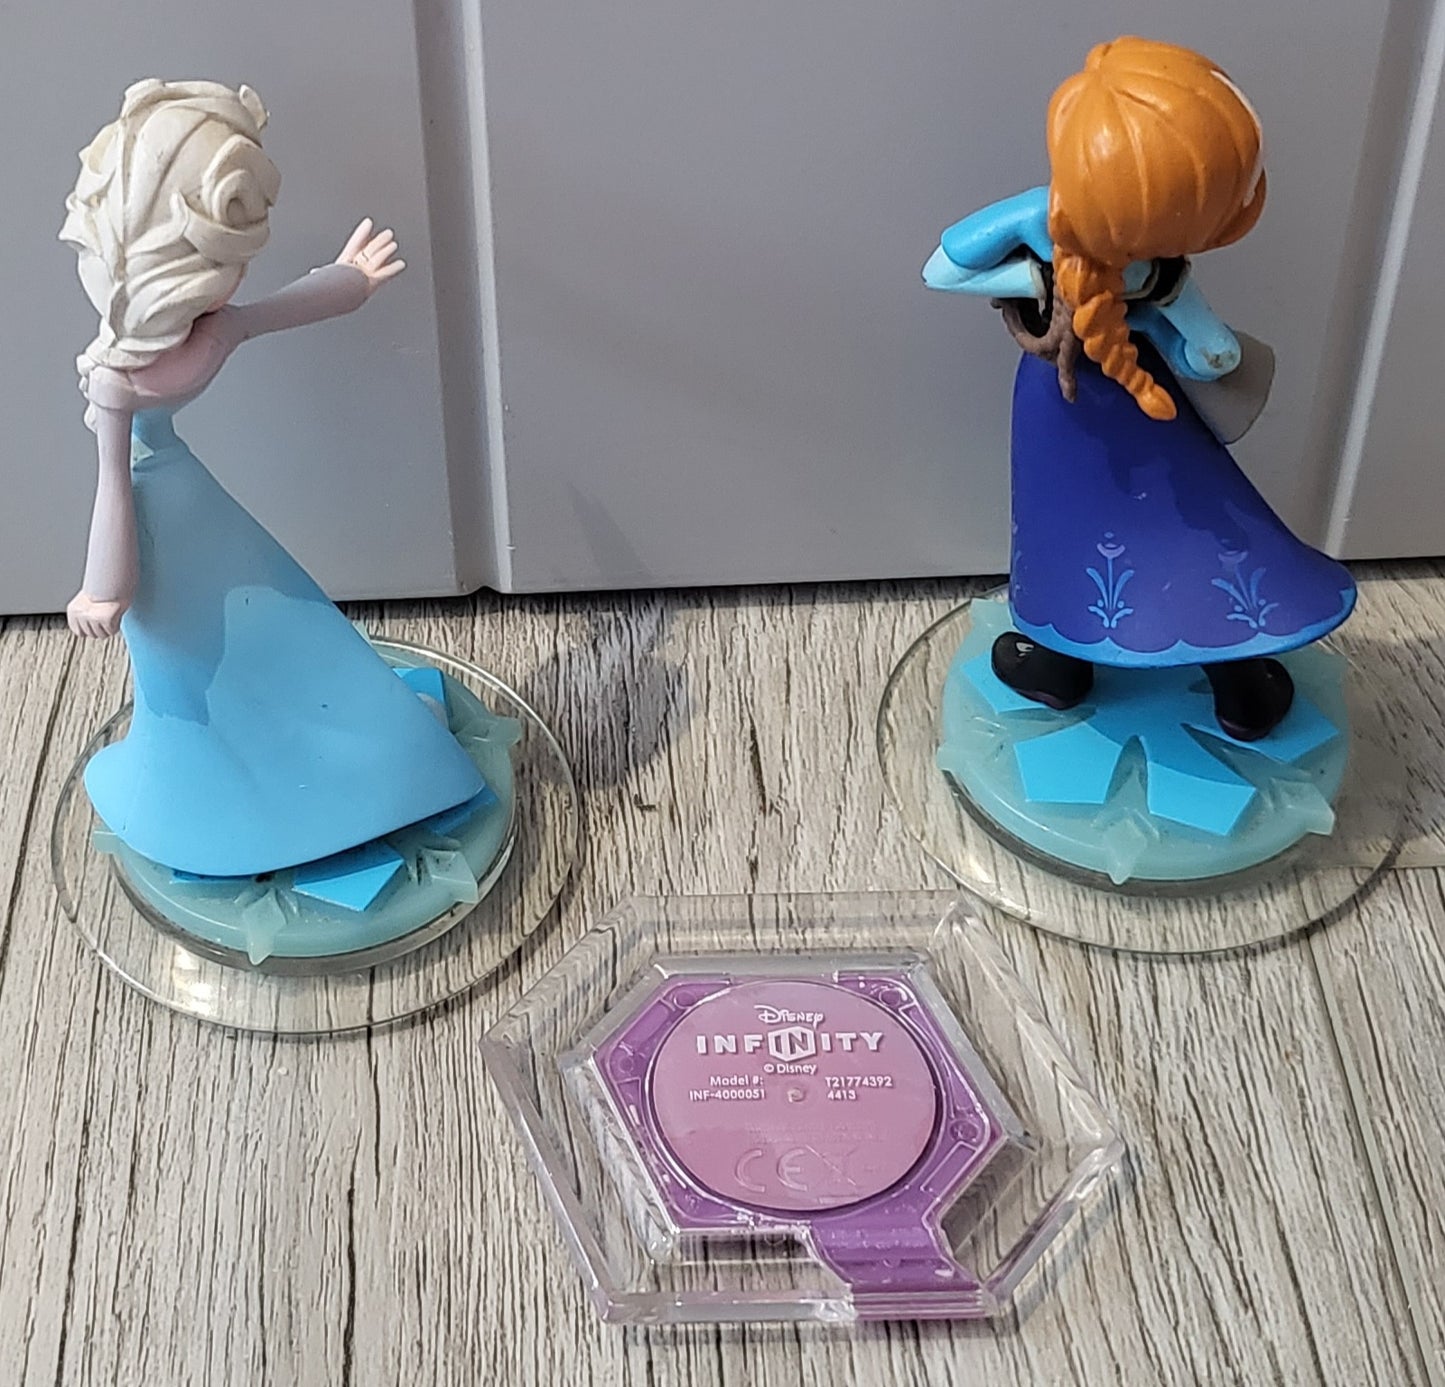 Anna & Elsa Disney Infinity Figures with Flourish Disc Accessory